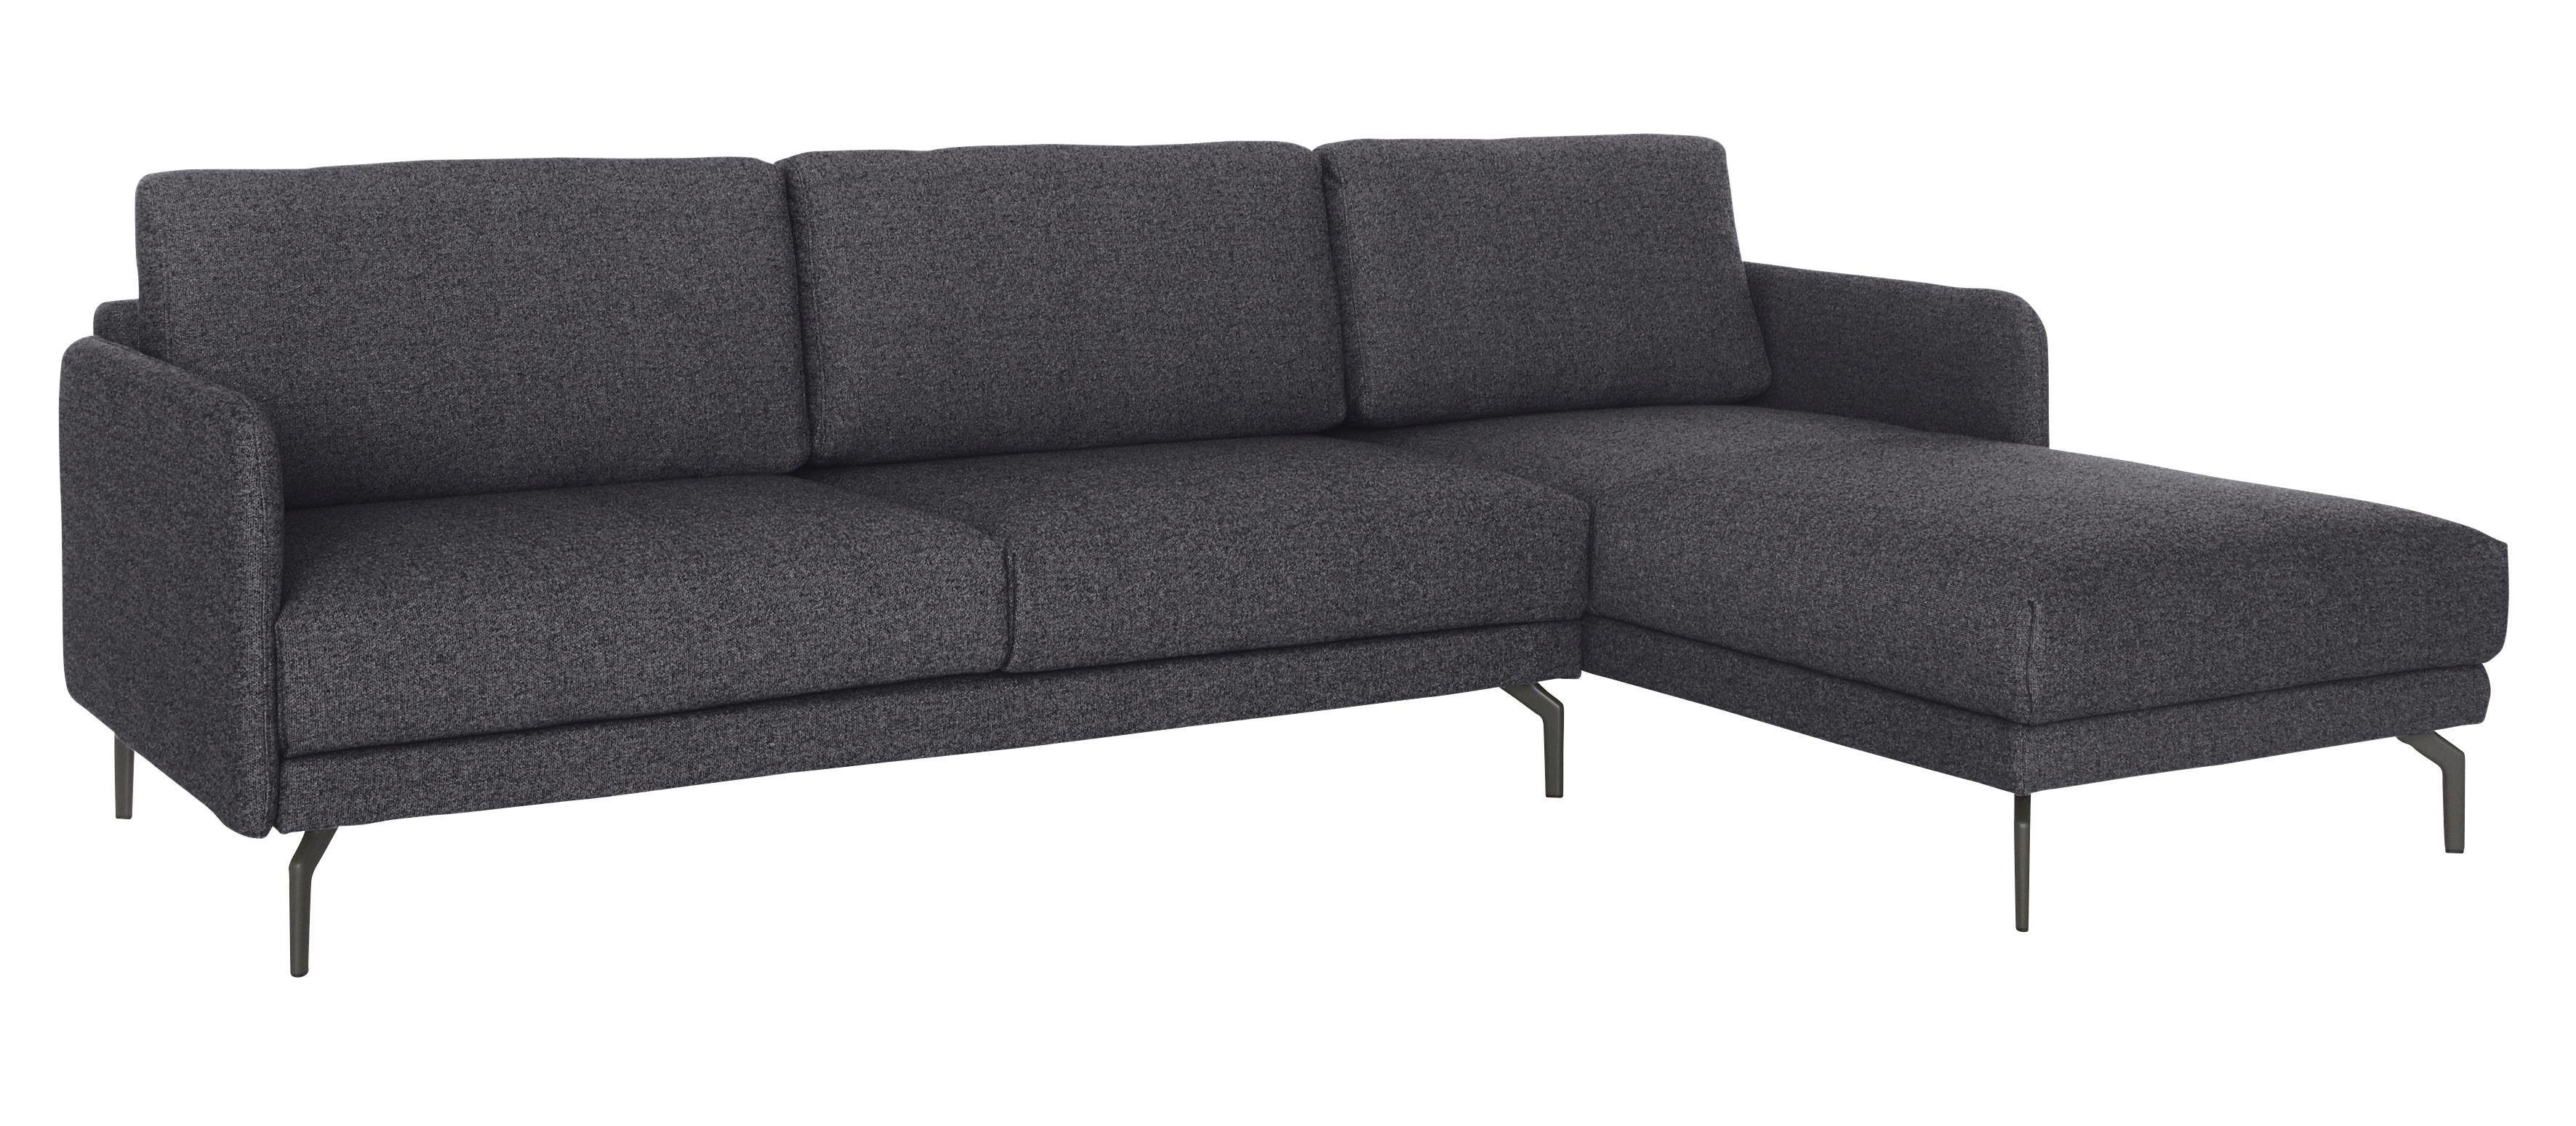 hülsta sofa Ecksofa 234 Breite hs.450, umbragrau schmal, cm, Armlehne Alugussfüße in sehr